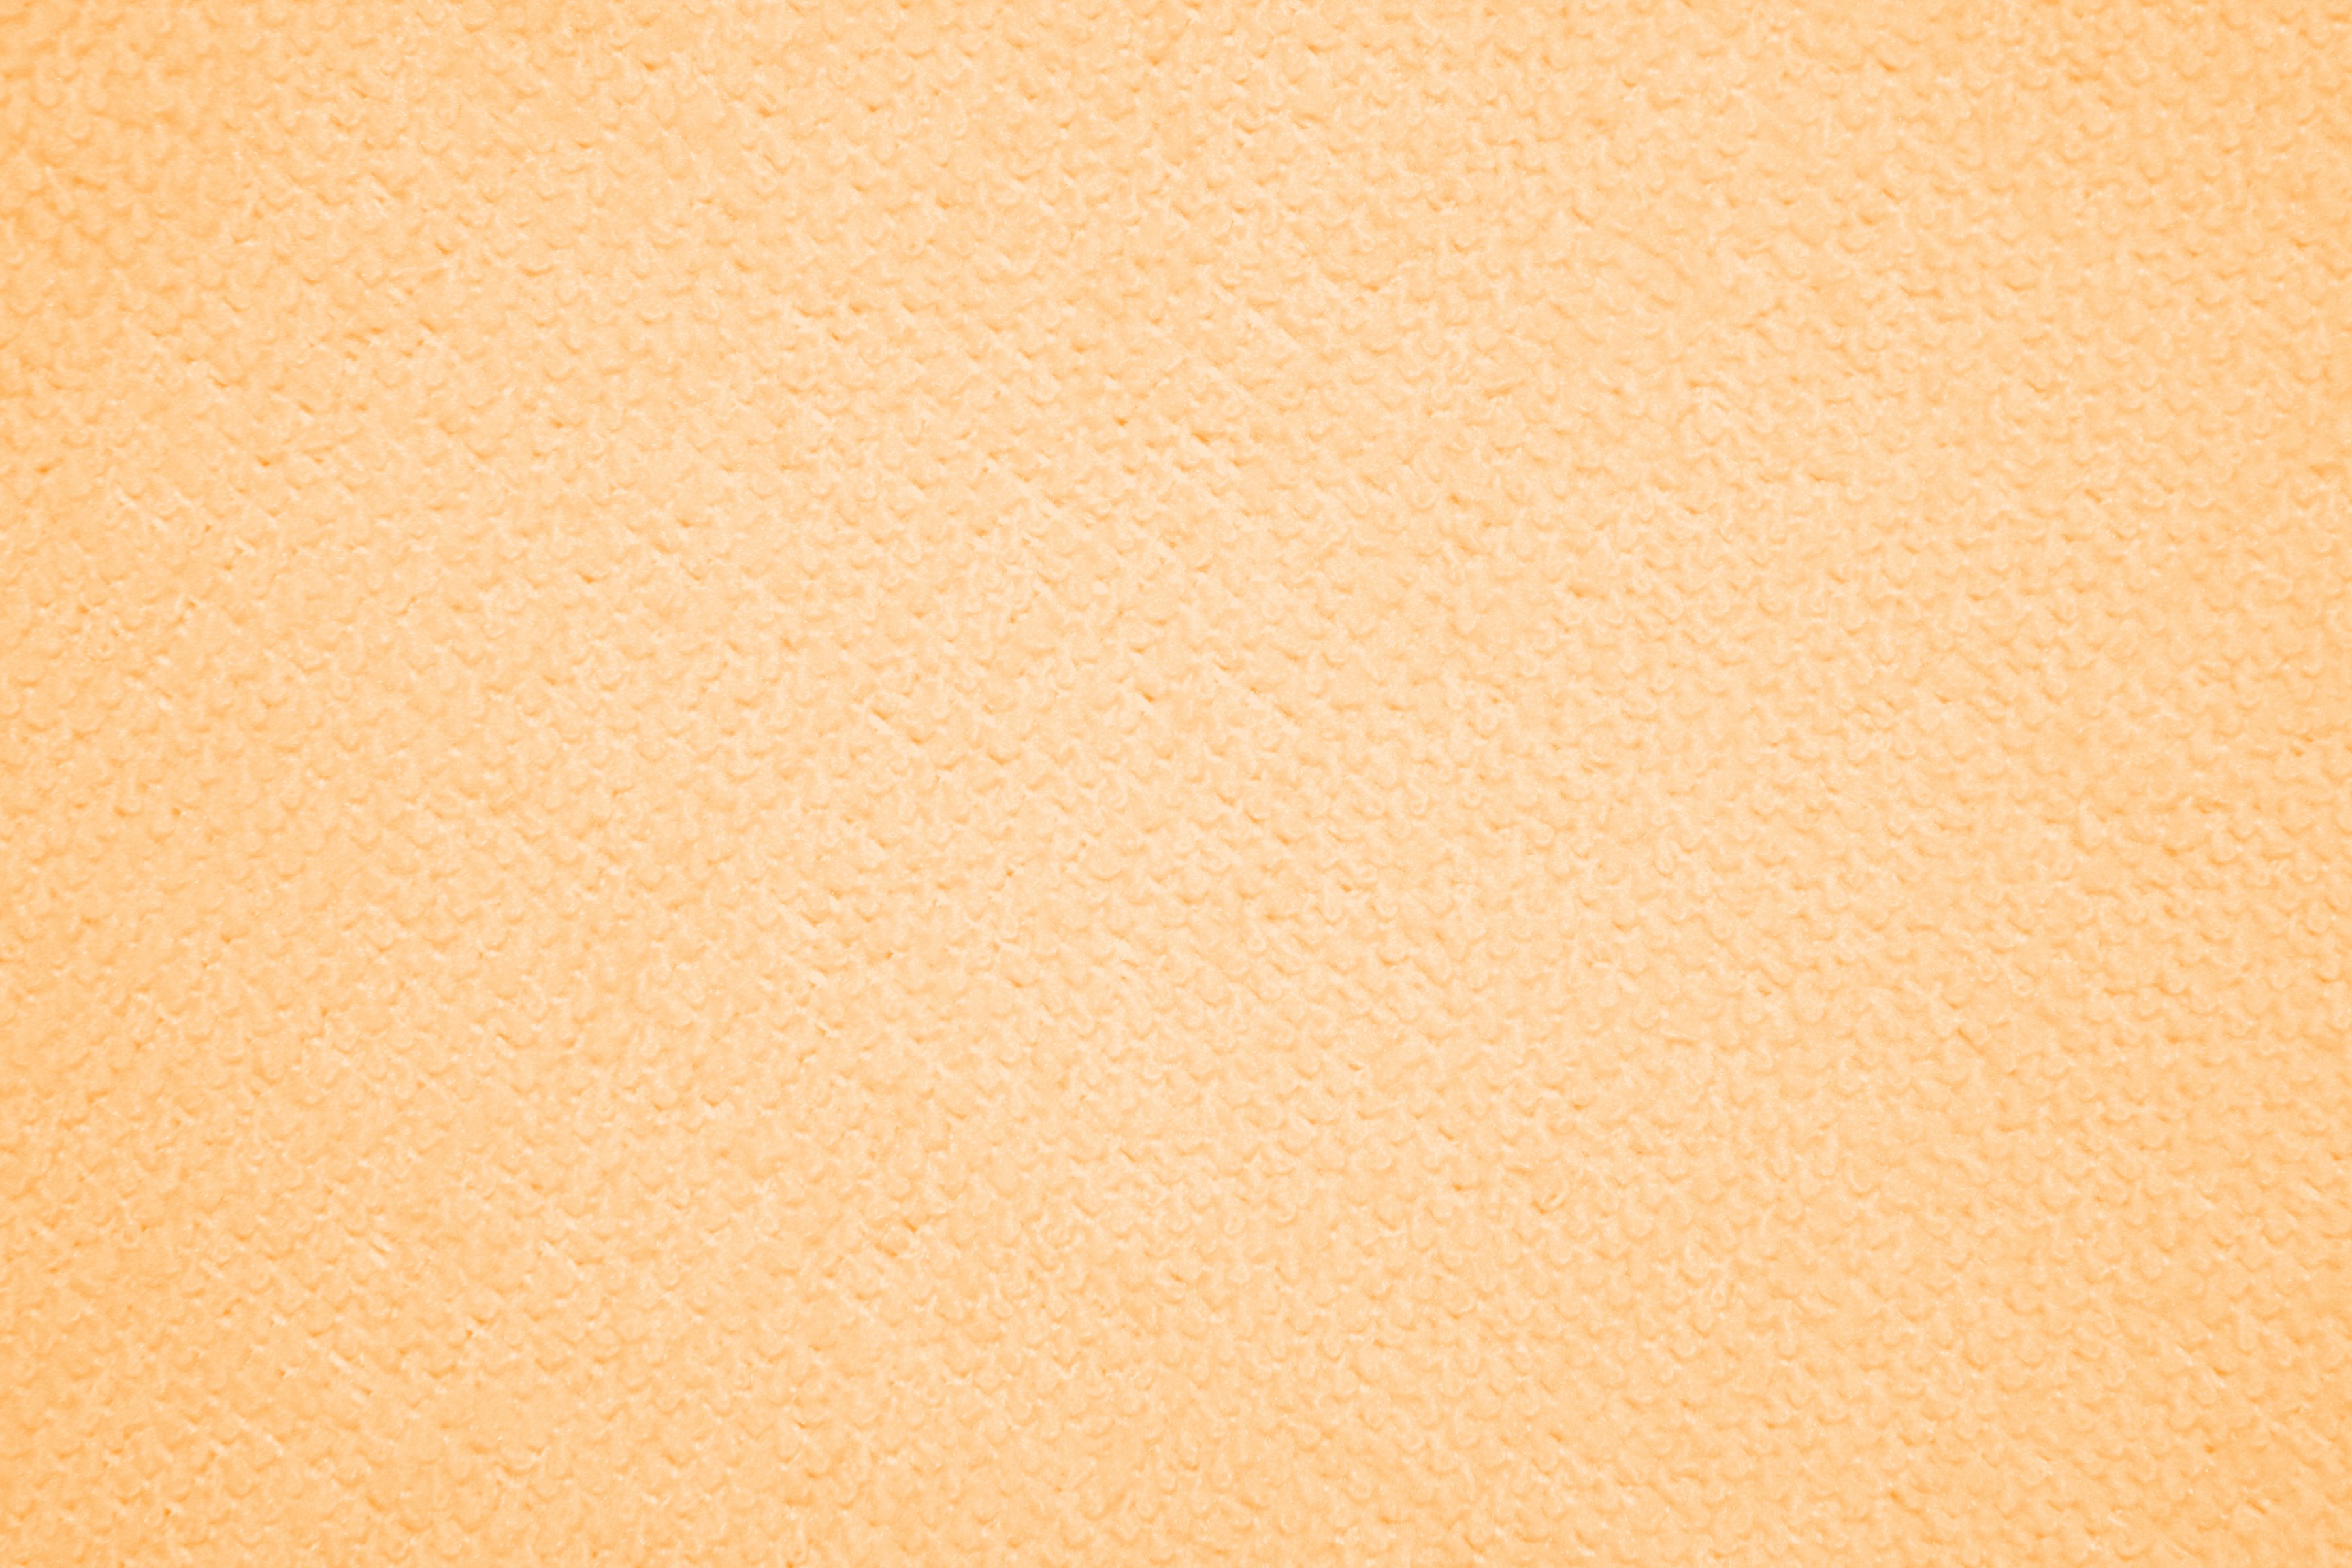 Peach or Light Orange Microfiber Cloth Fabric Texture Picture | Free  Photograph | Photos Public Domain